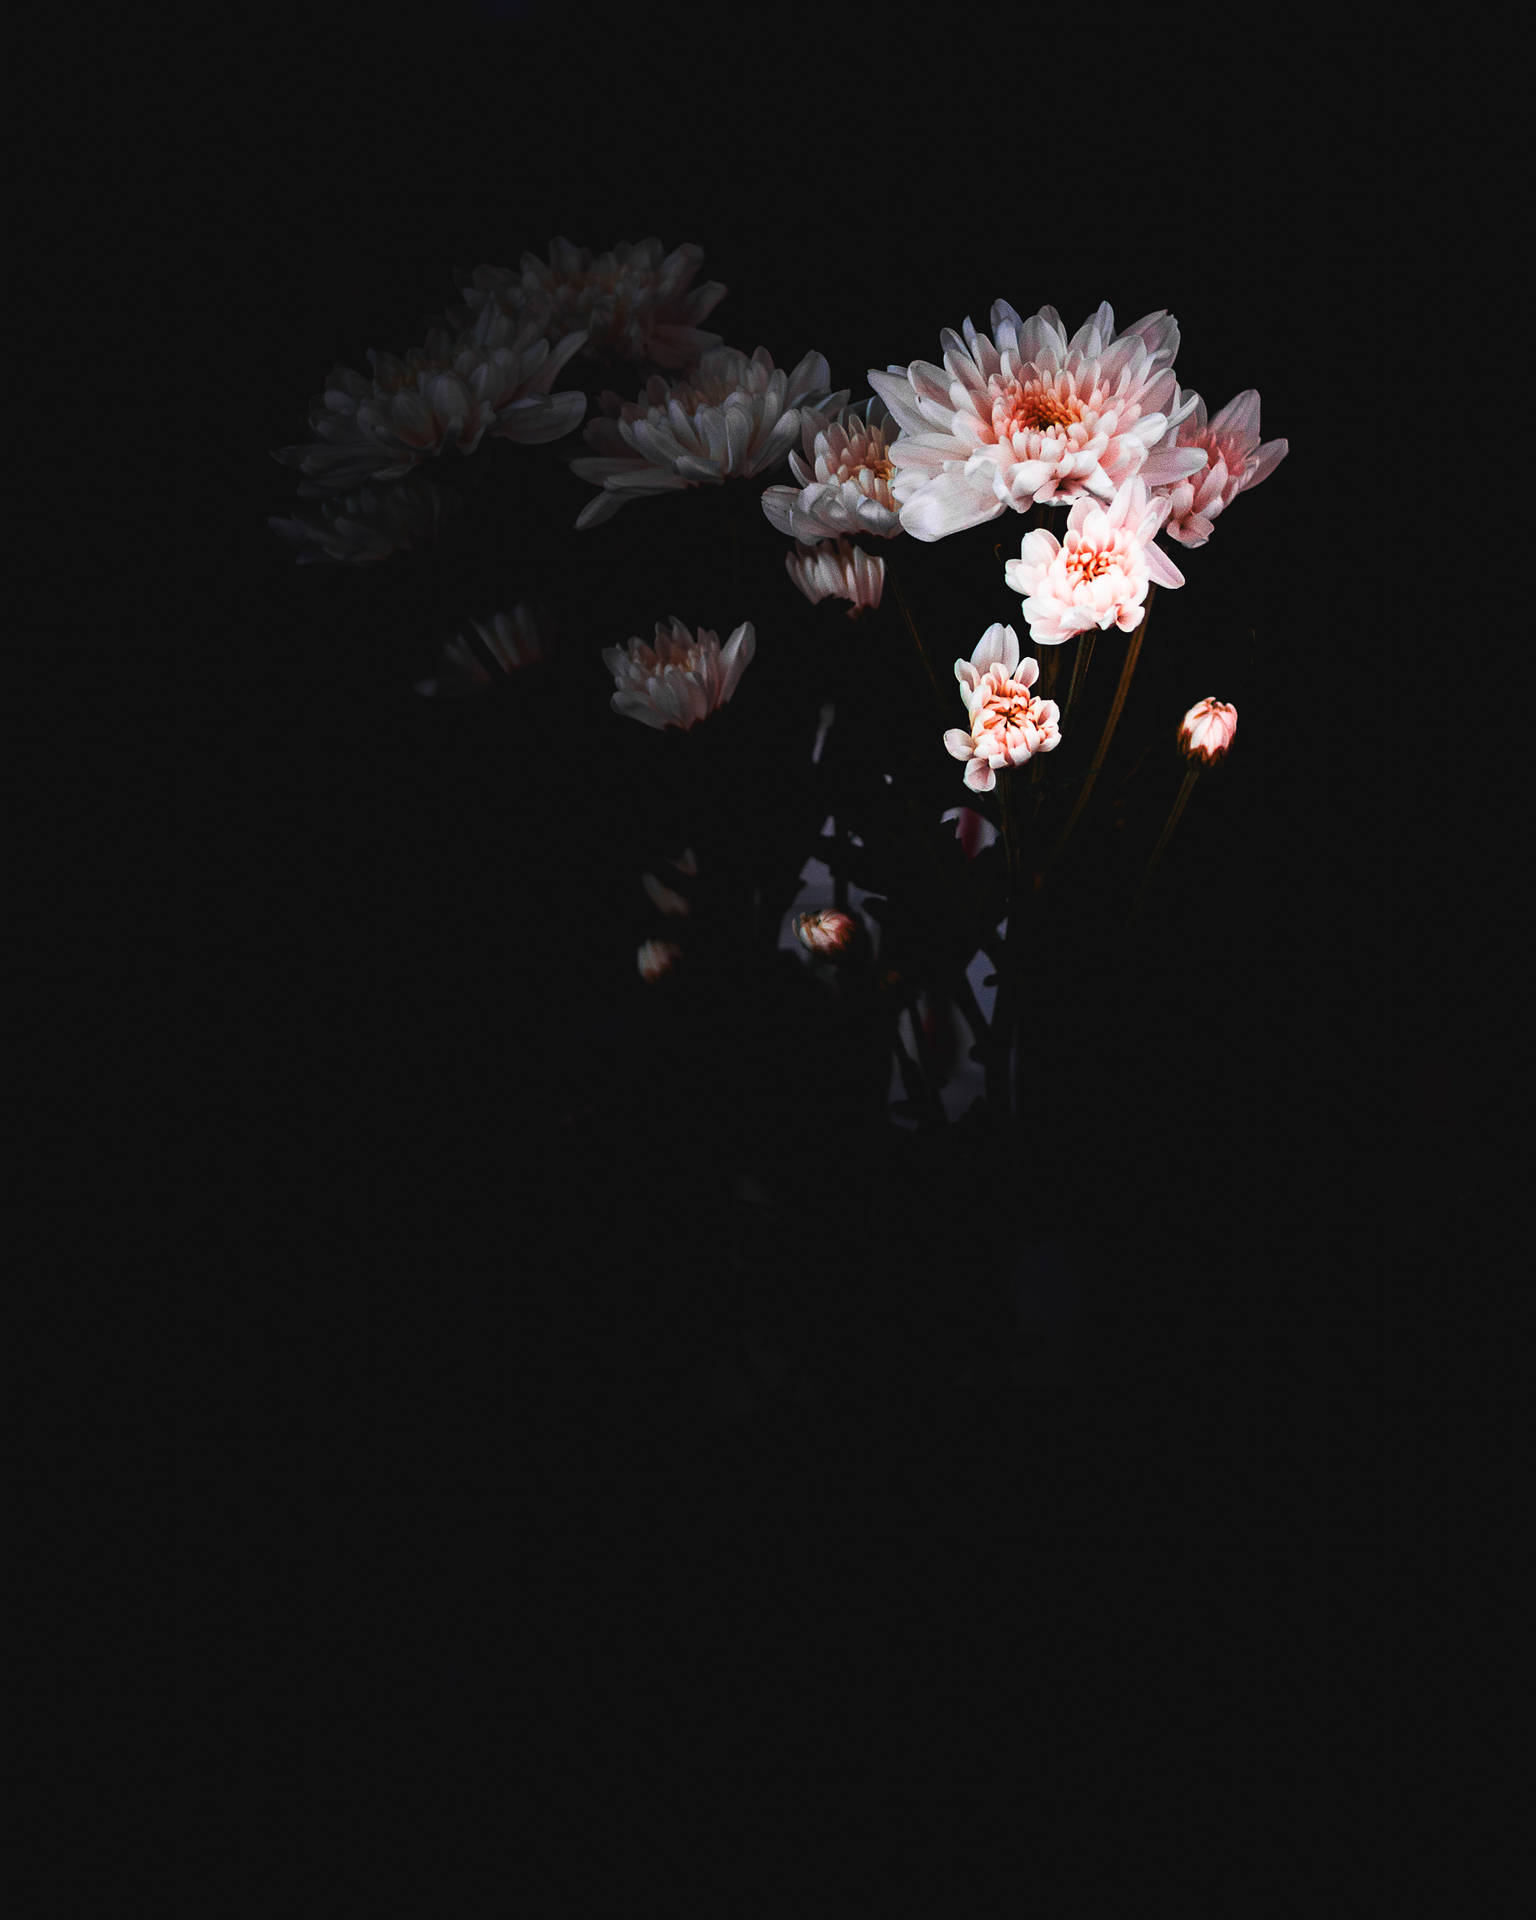 En vase med blomster i mørket Wallpaper